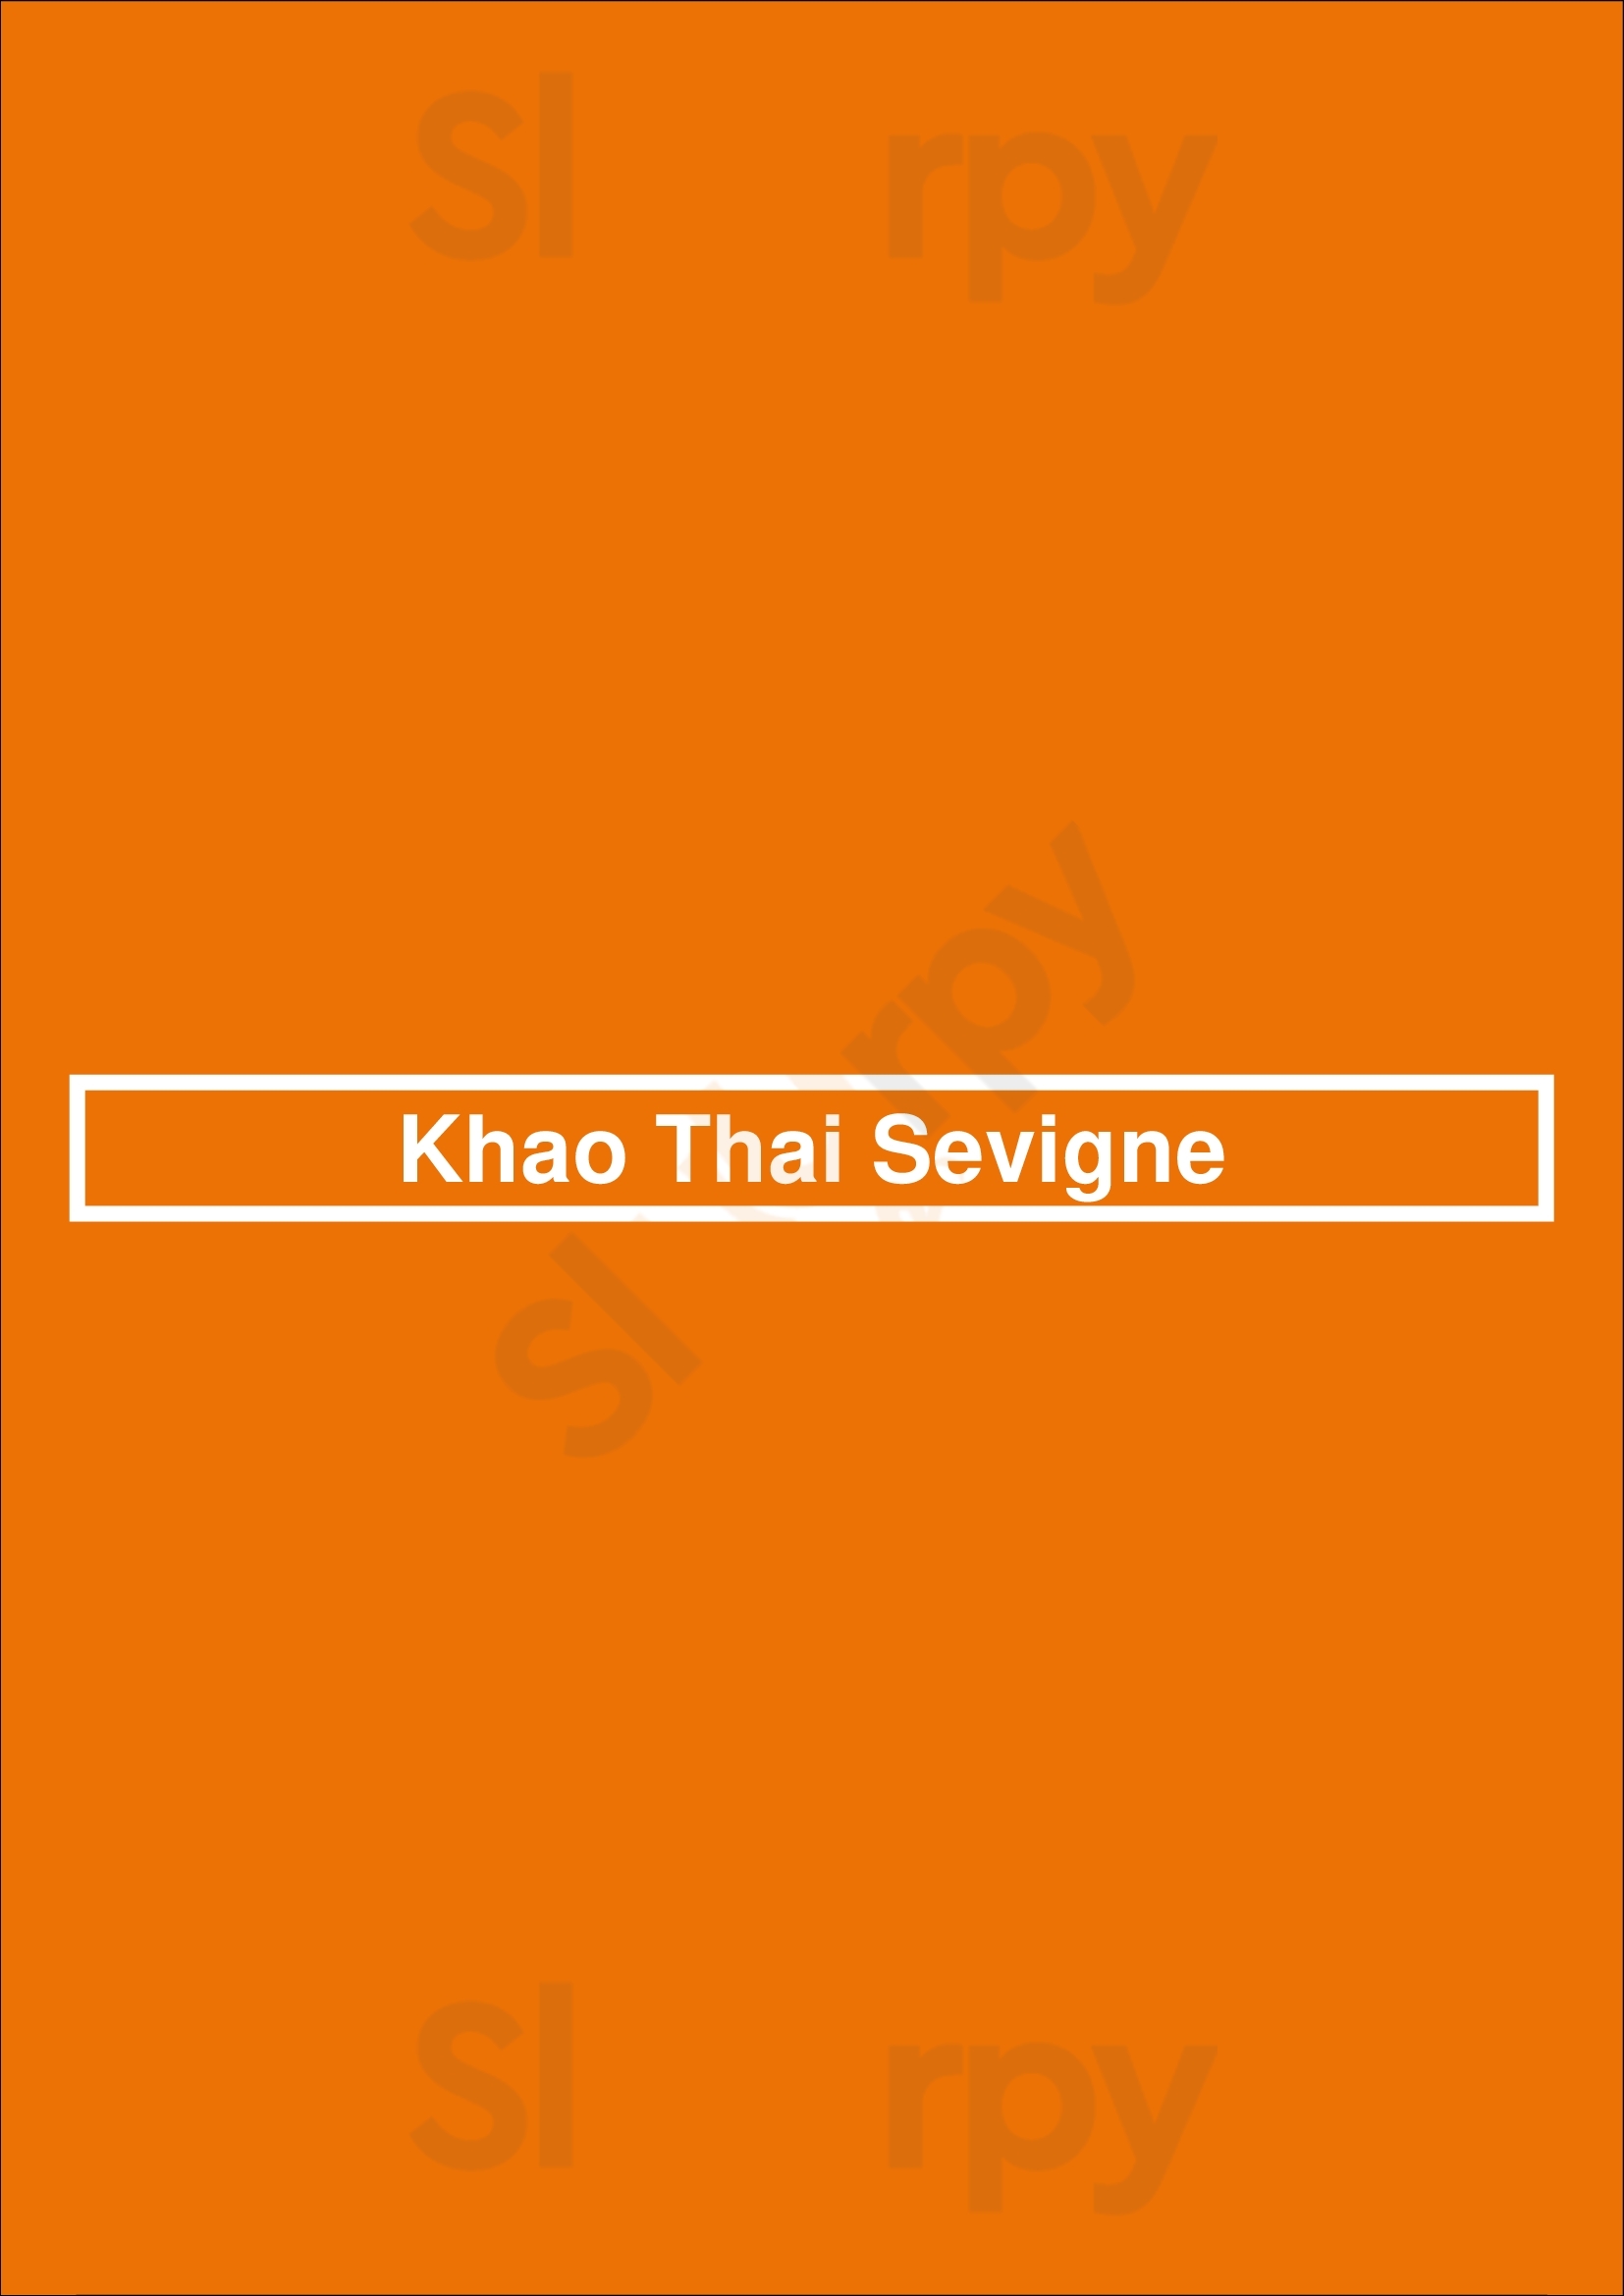 Khao Thai Sevigne Paris Menu - 1